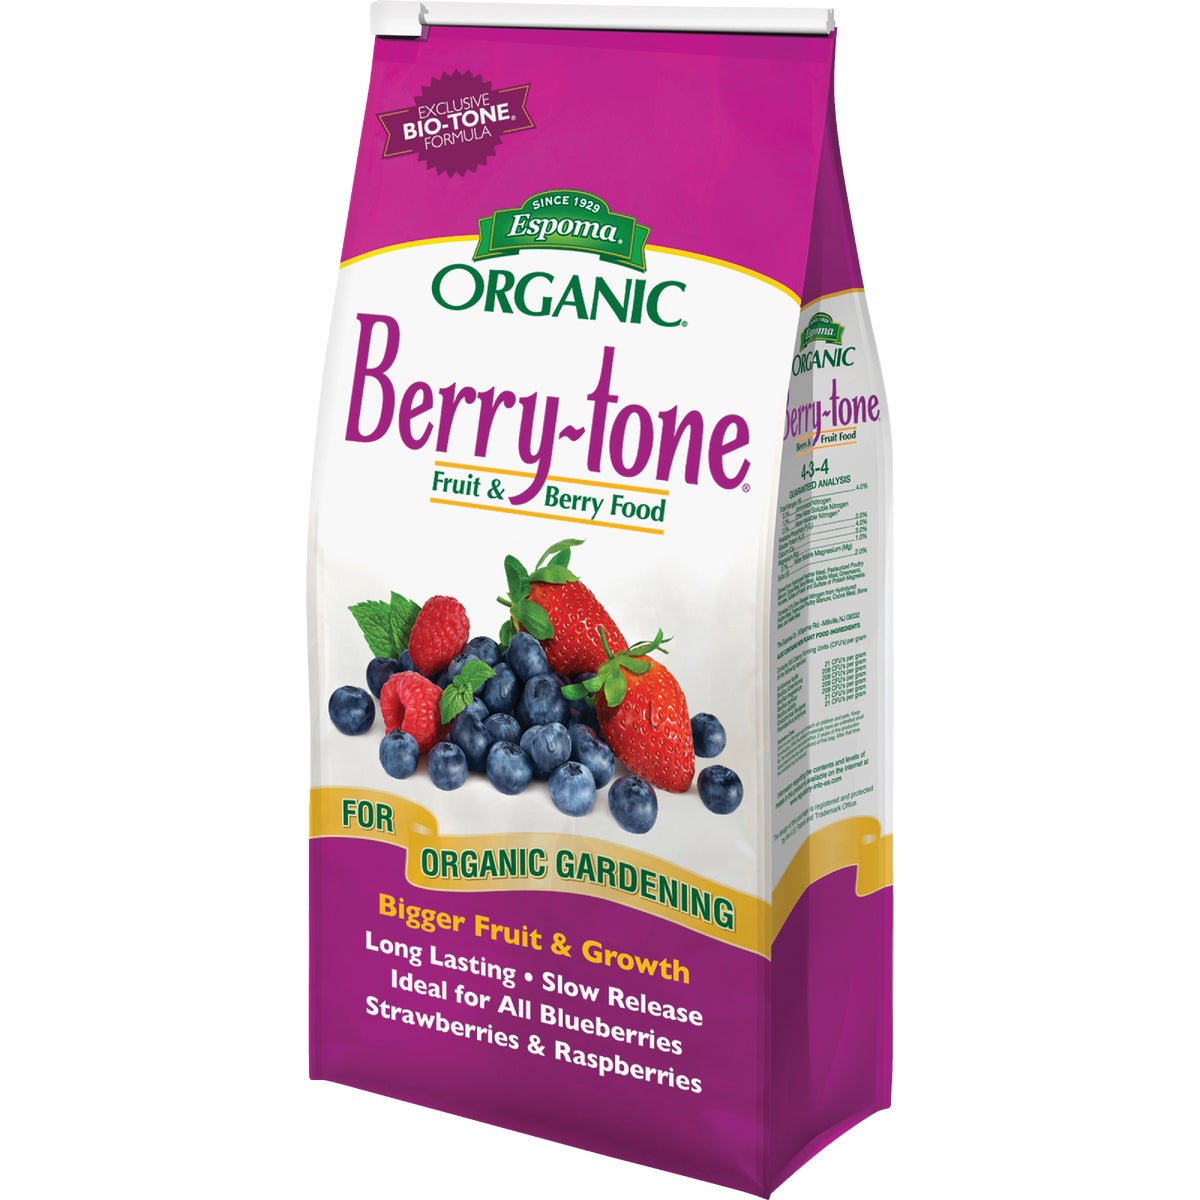 Espoma Organic Berry-tone 4 Lb. 4-3-4 Dry Plant Food